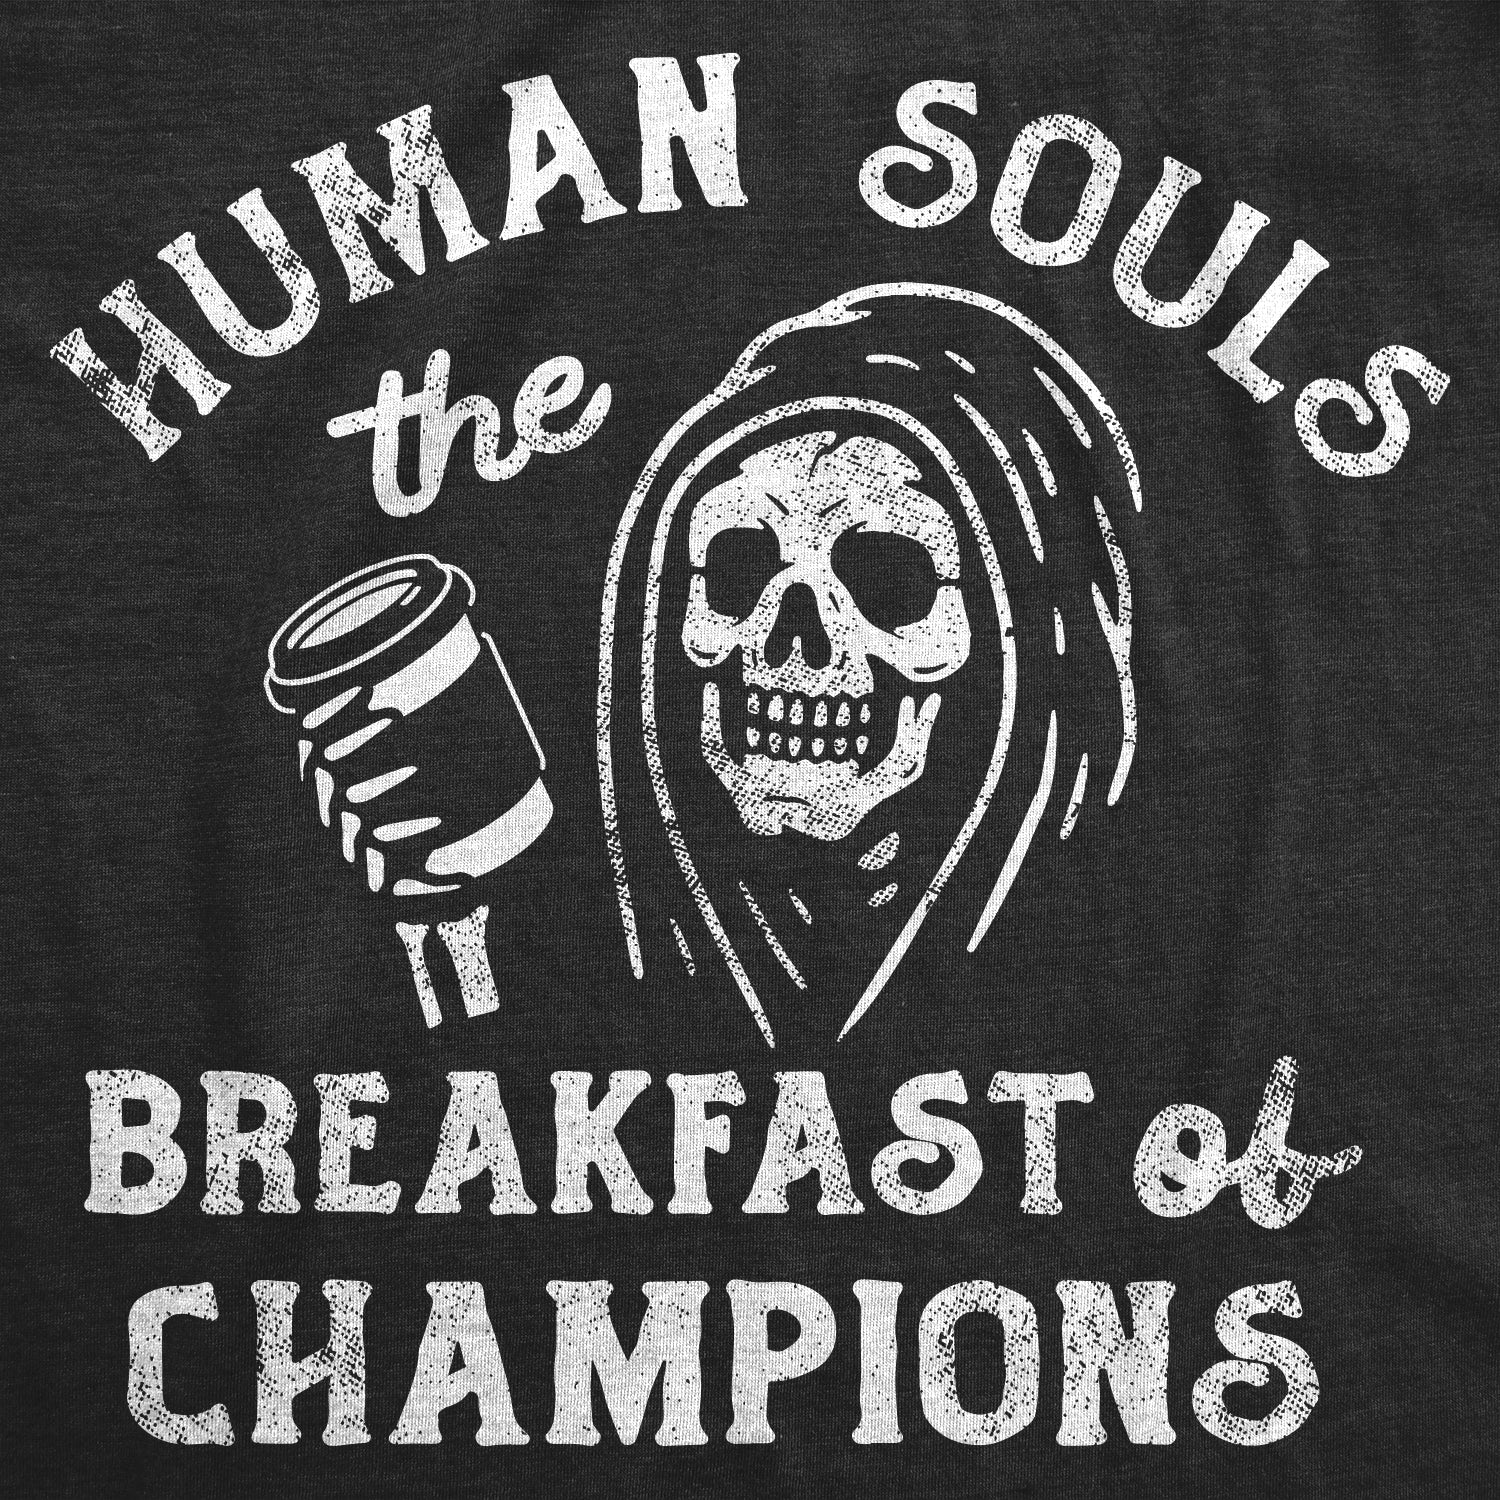 Funny Heather Black - SOULS Human Souls The Breakfast Of Champions Mens T Shirt Nerdy Halloween Sarcastic Tee